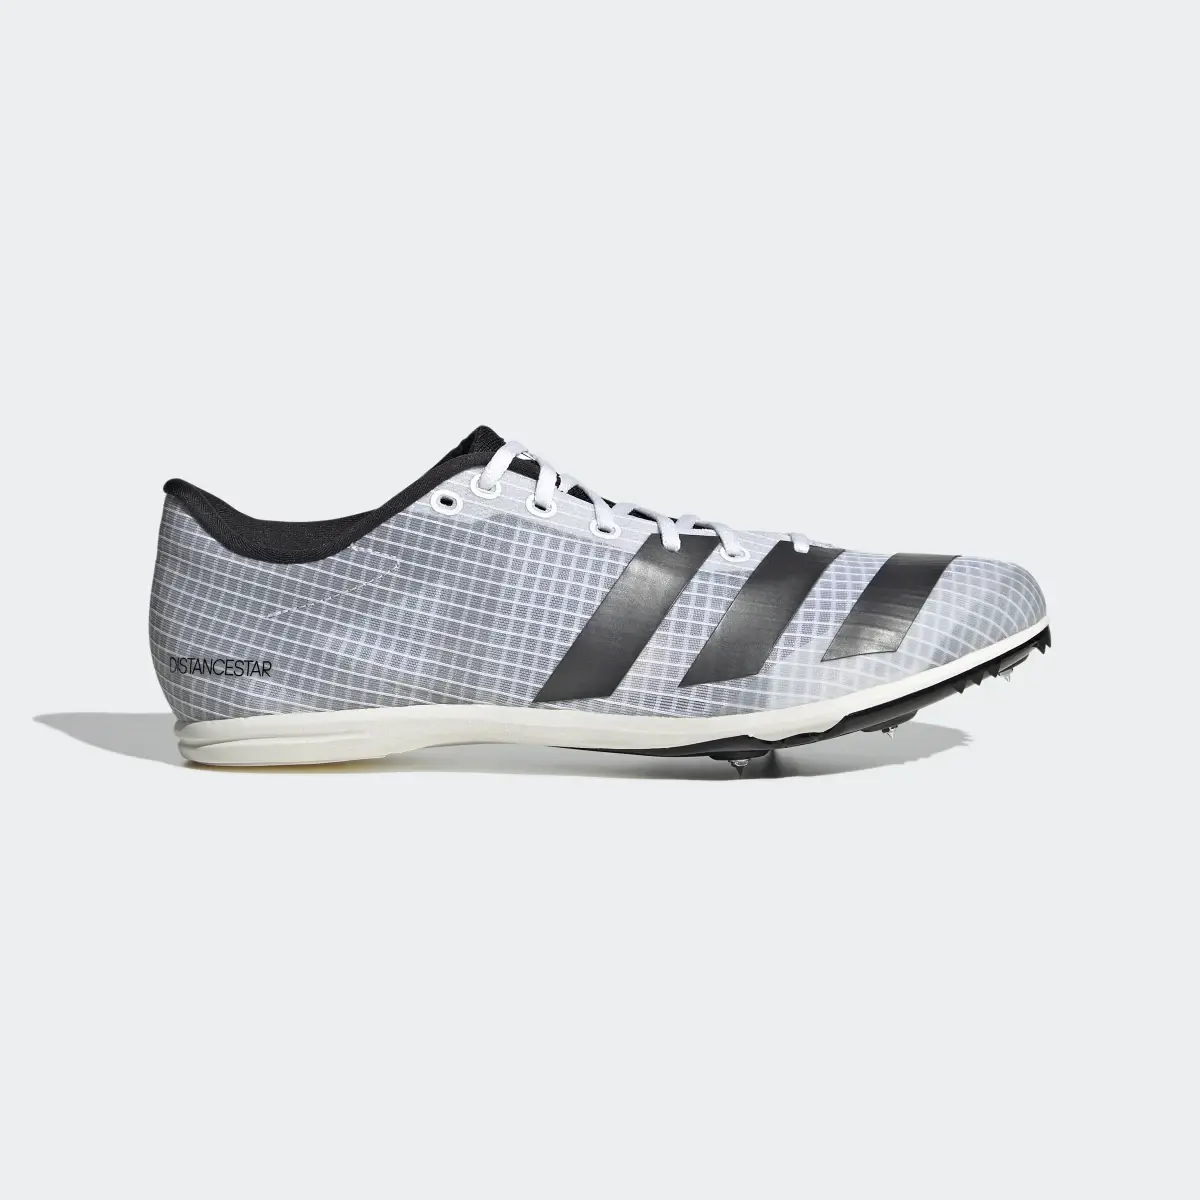 Adidas DistanceStar Spike-Schuh. 2